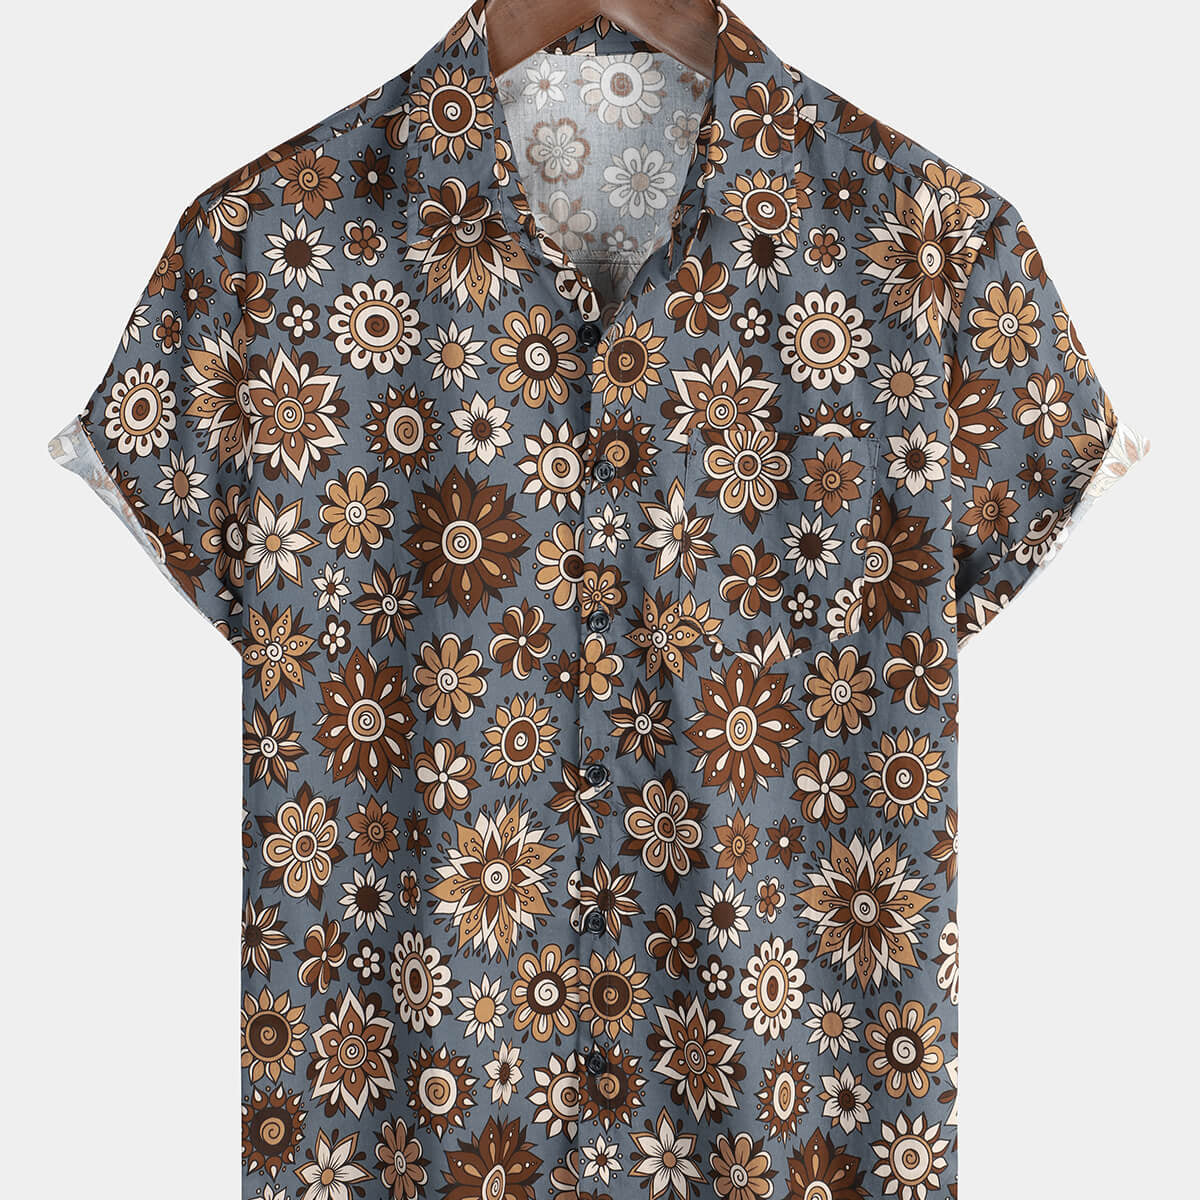 Men's Floral 100% Cotton Vintage Vacation Button Up Summer Shirt